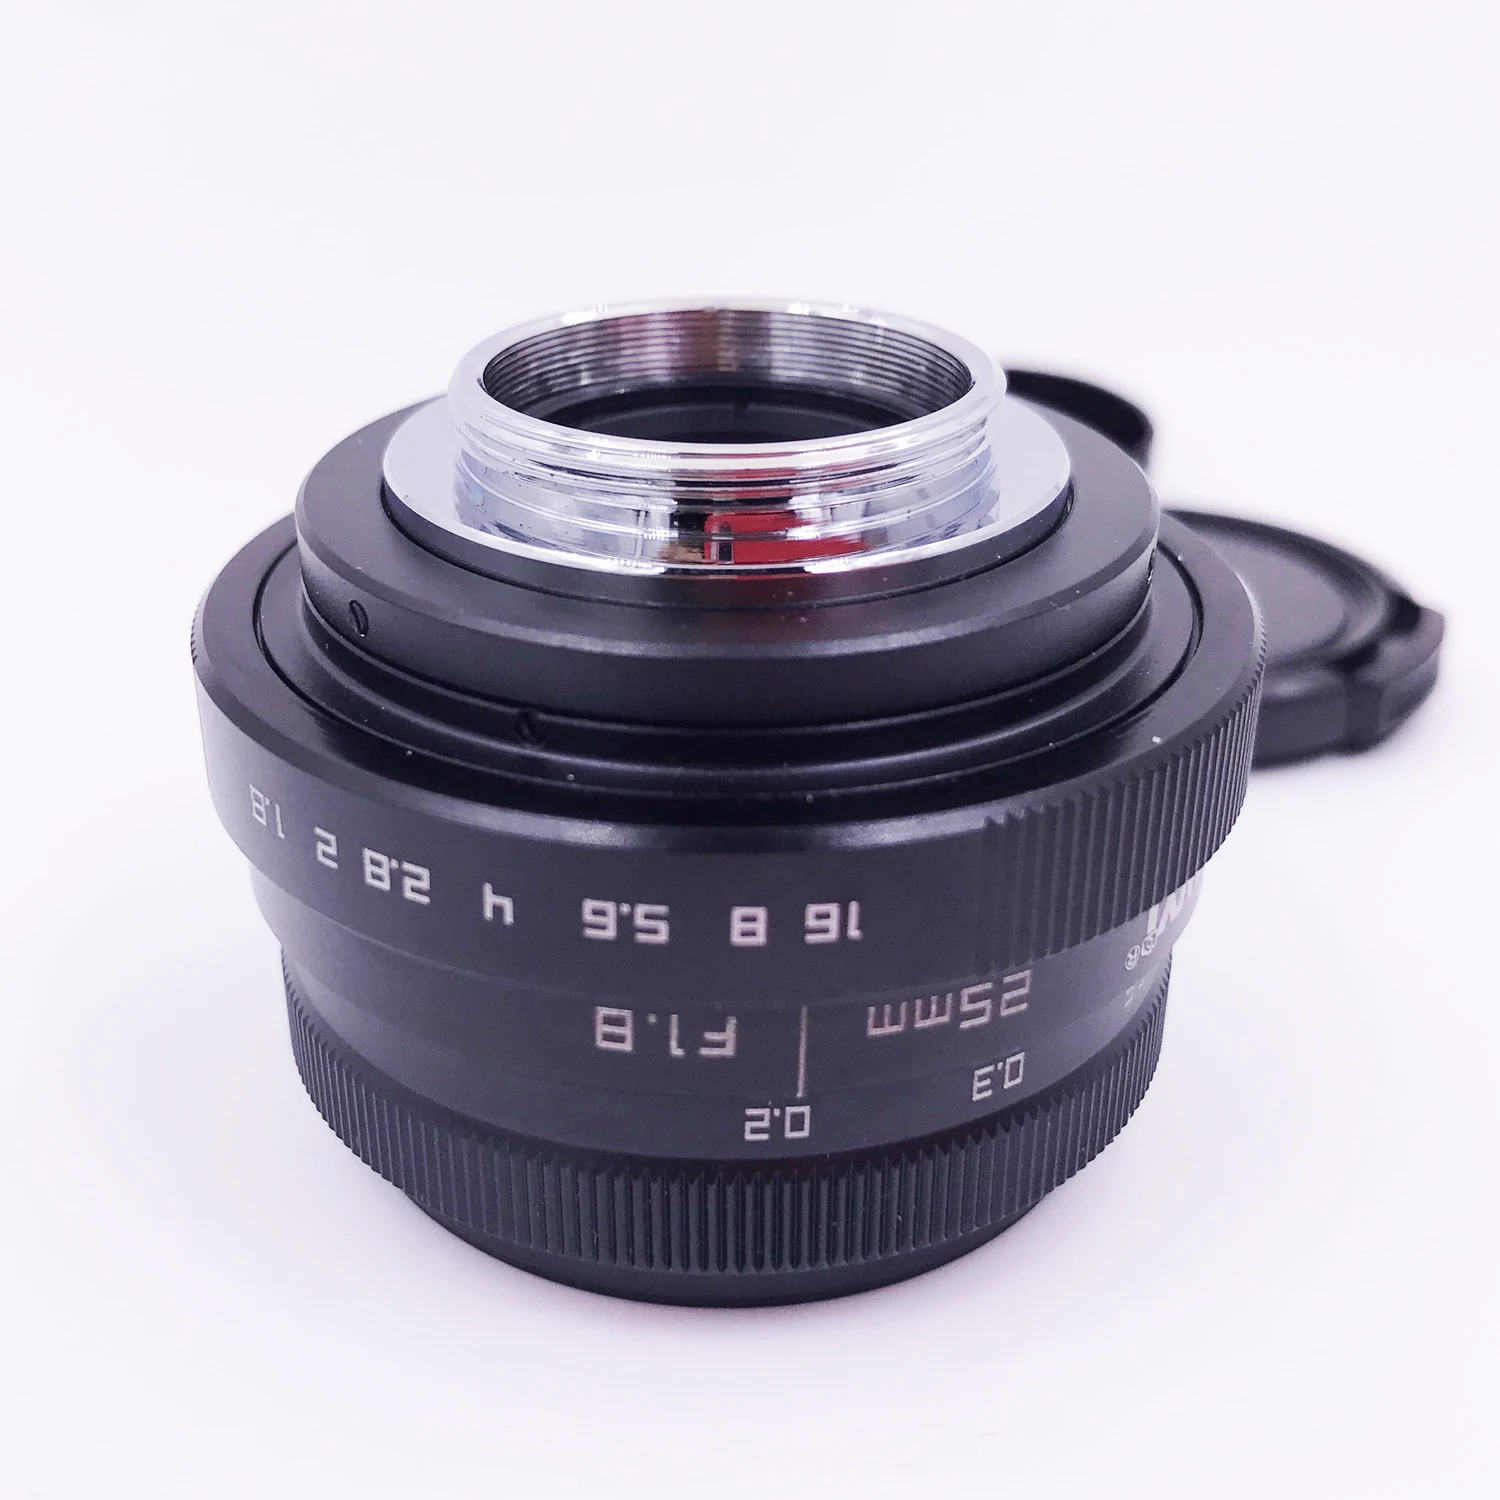 Мини 25 мм F1.8 APS-C ручной фокус cctv объектив для Canon EOSM nikon1 sony e mount Fuji FX m43 pentax pq беззеркальная камера